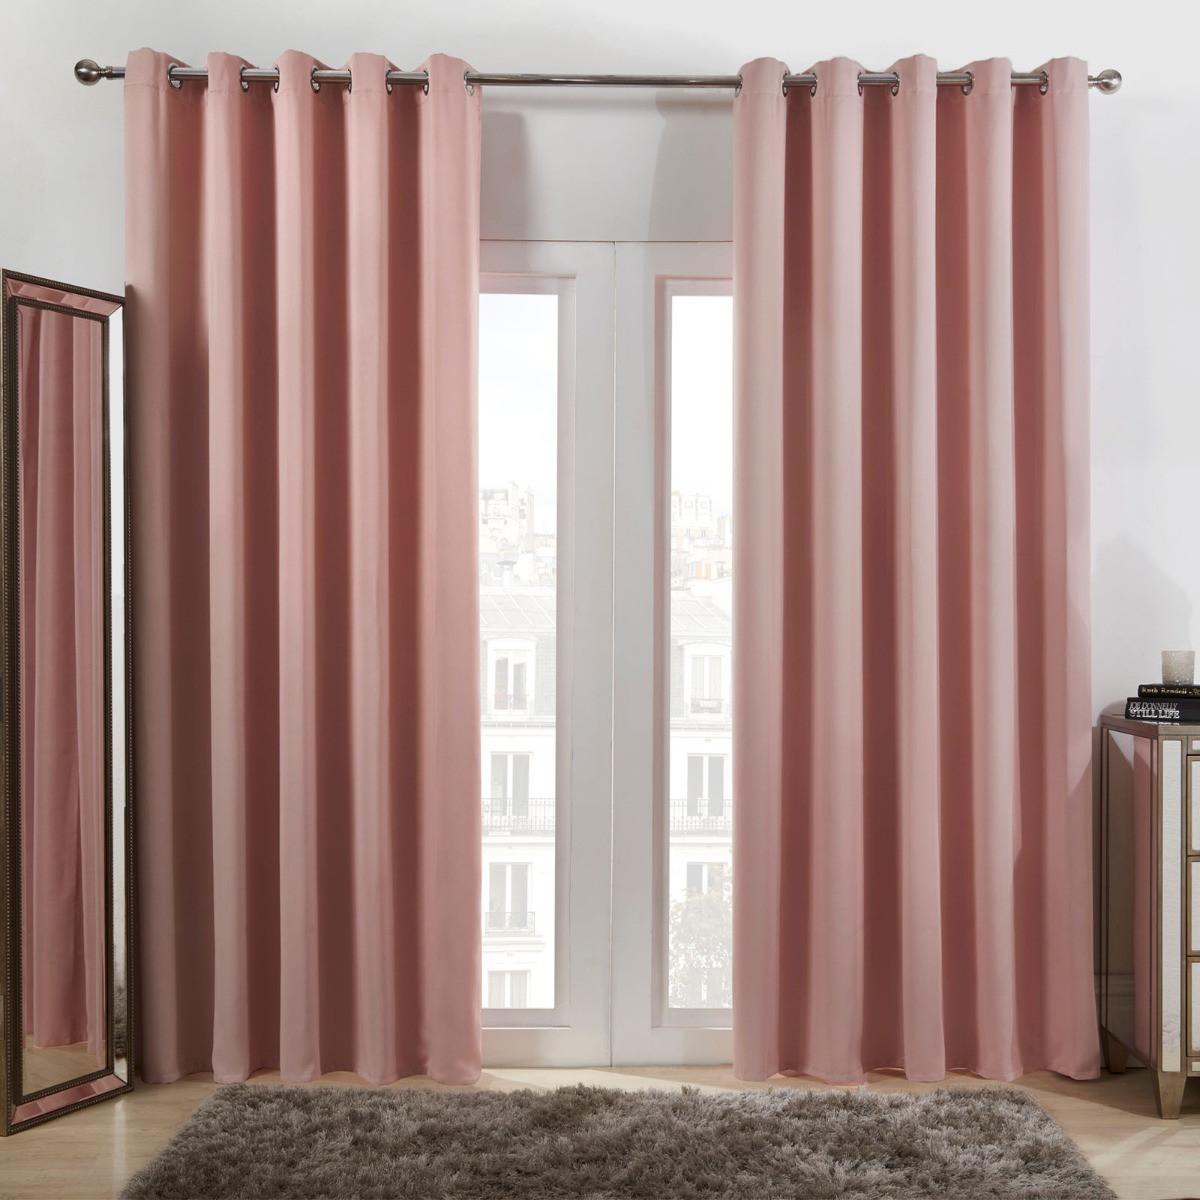 Dreamscene Eyelet Blackout Curtains, Blush Pink - 46 x 72''>